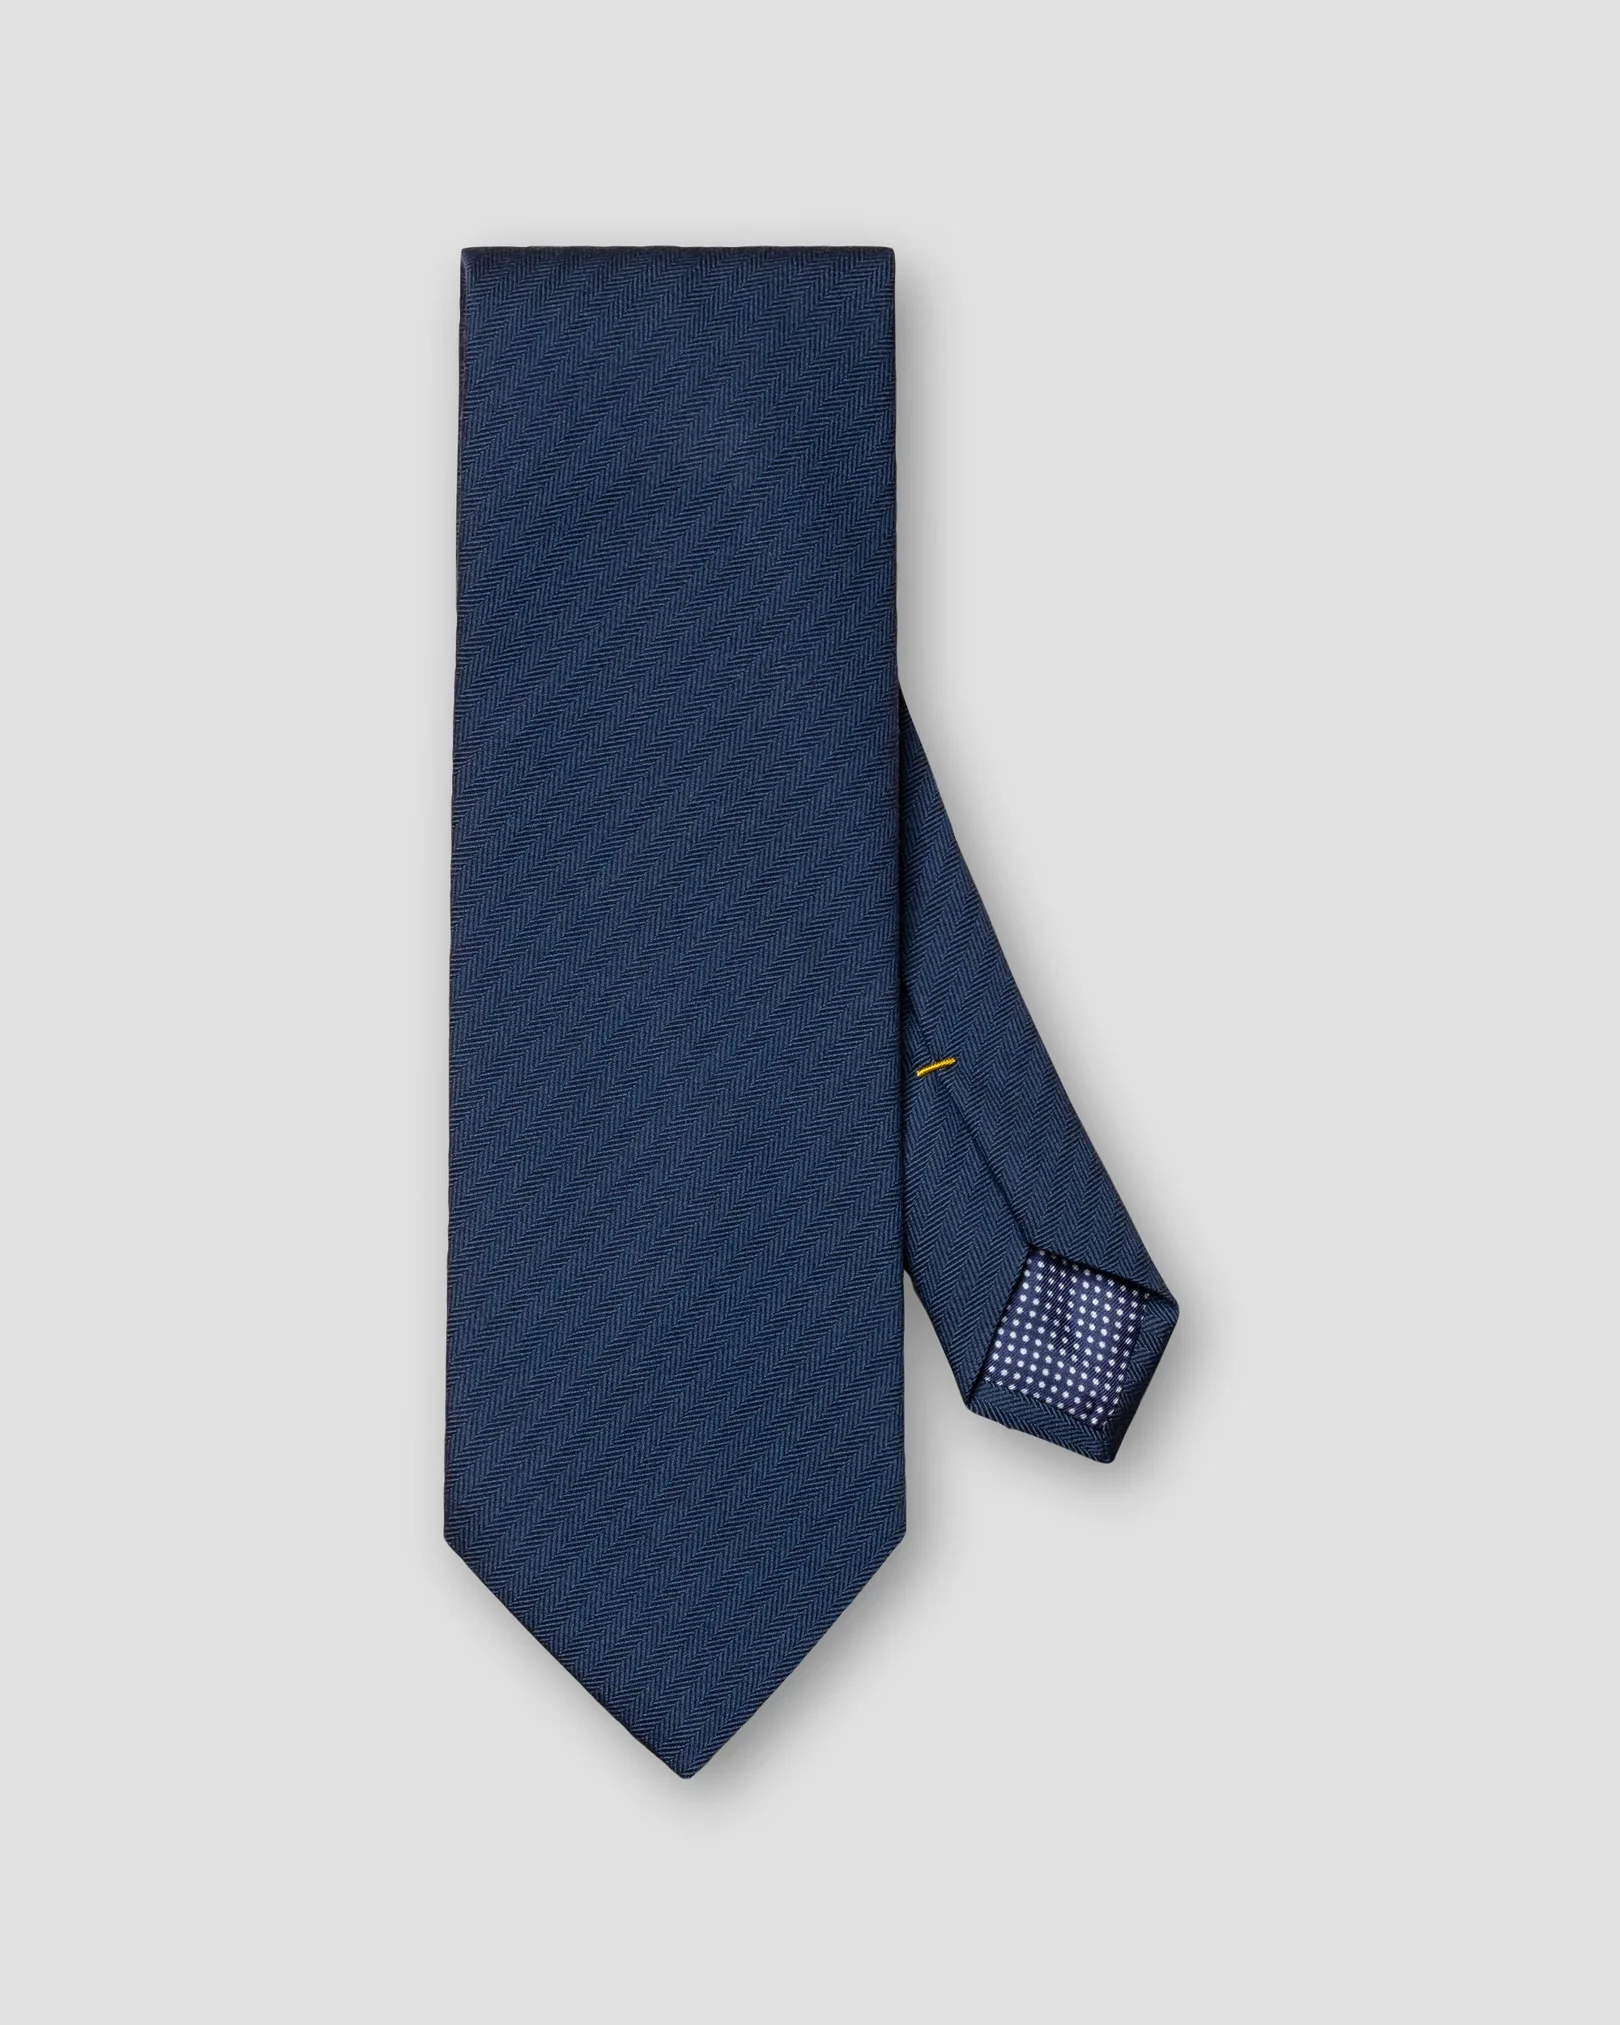 Eton - dark blue herringbone tie